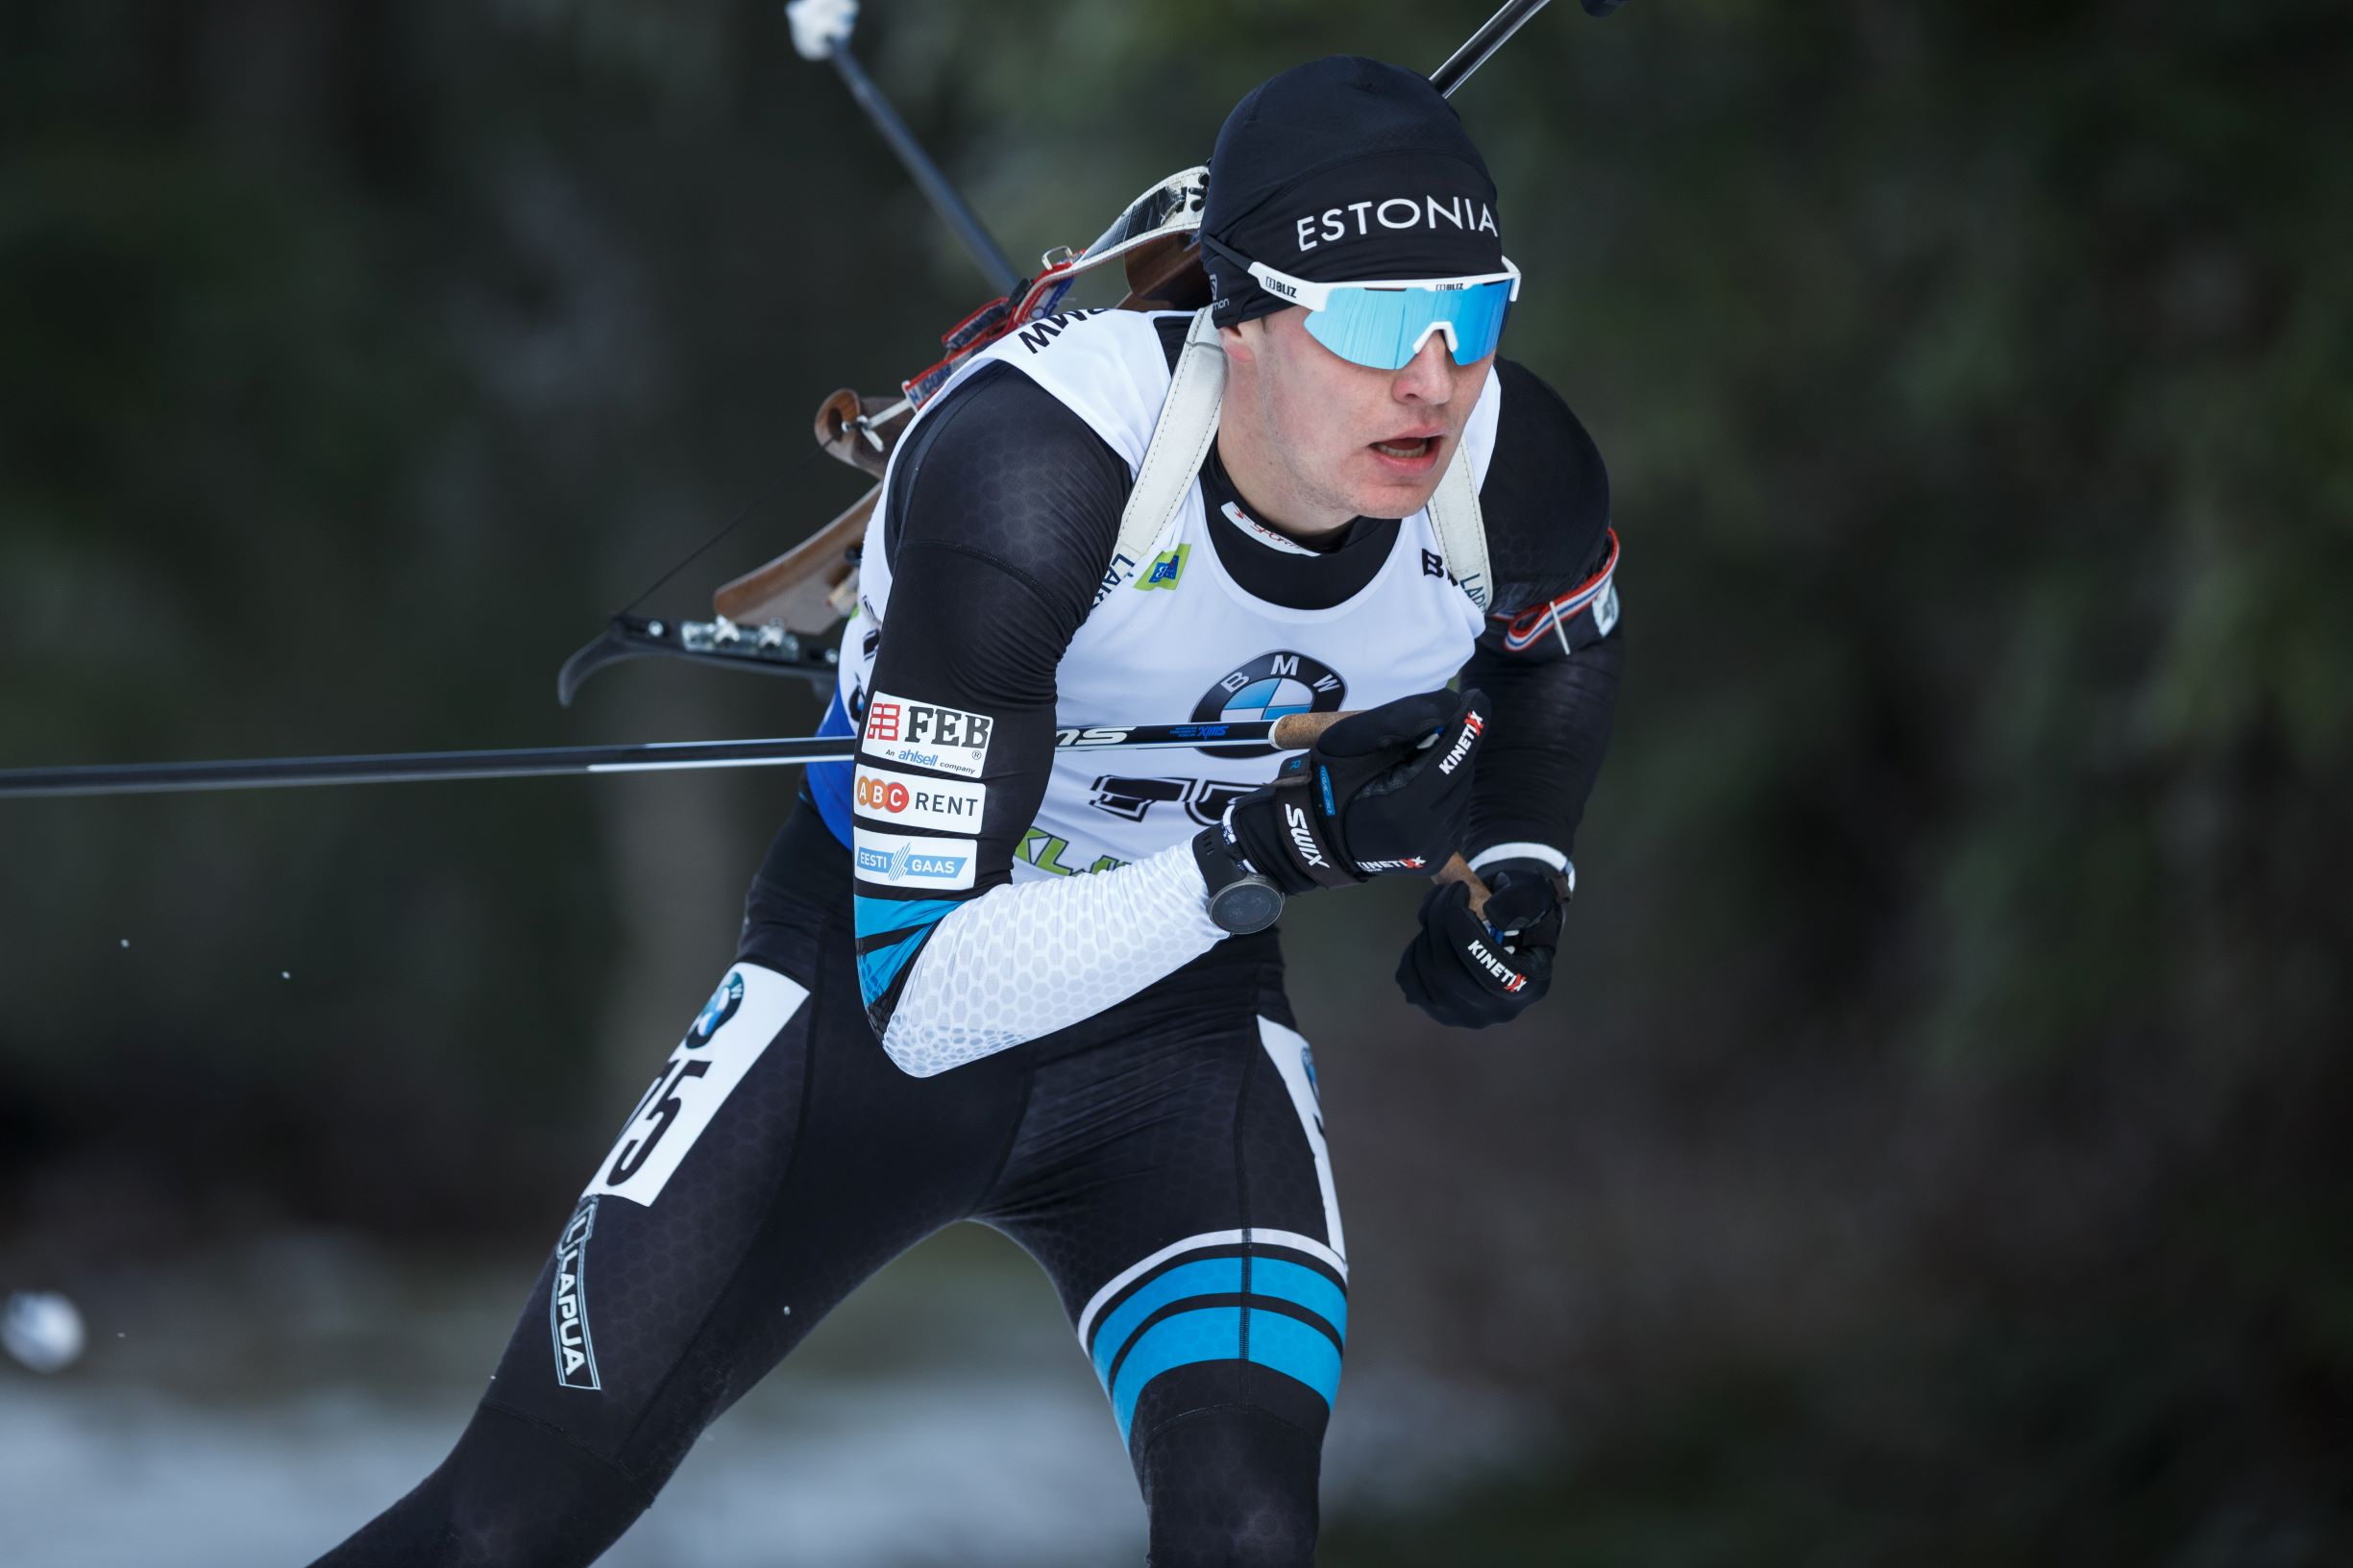 Eesti Gaas is a sponsor of Estonian Biathlon Team, Photo Jarek Jõepera